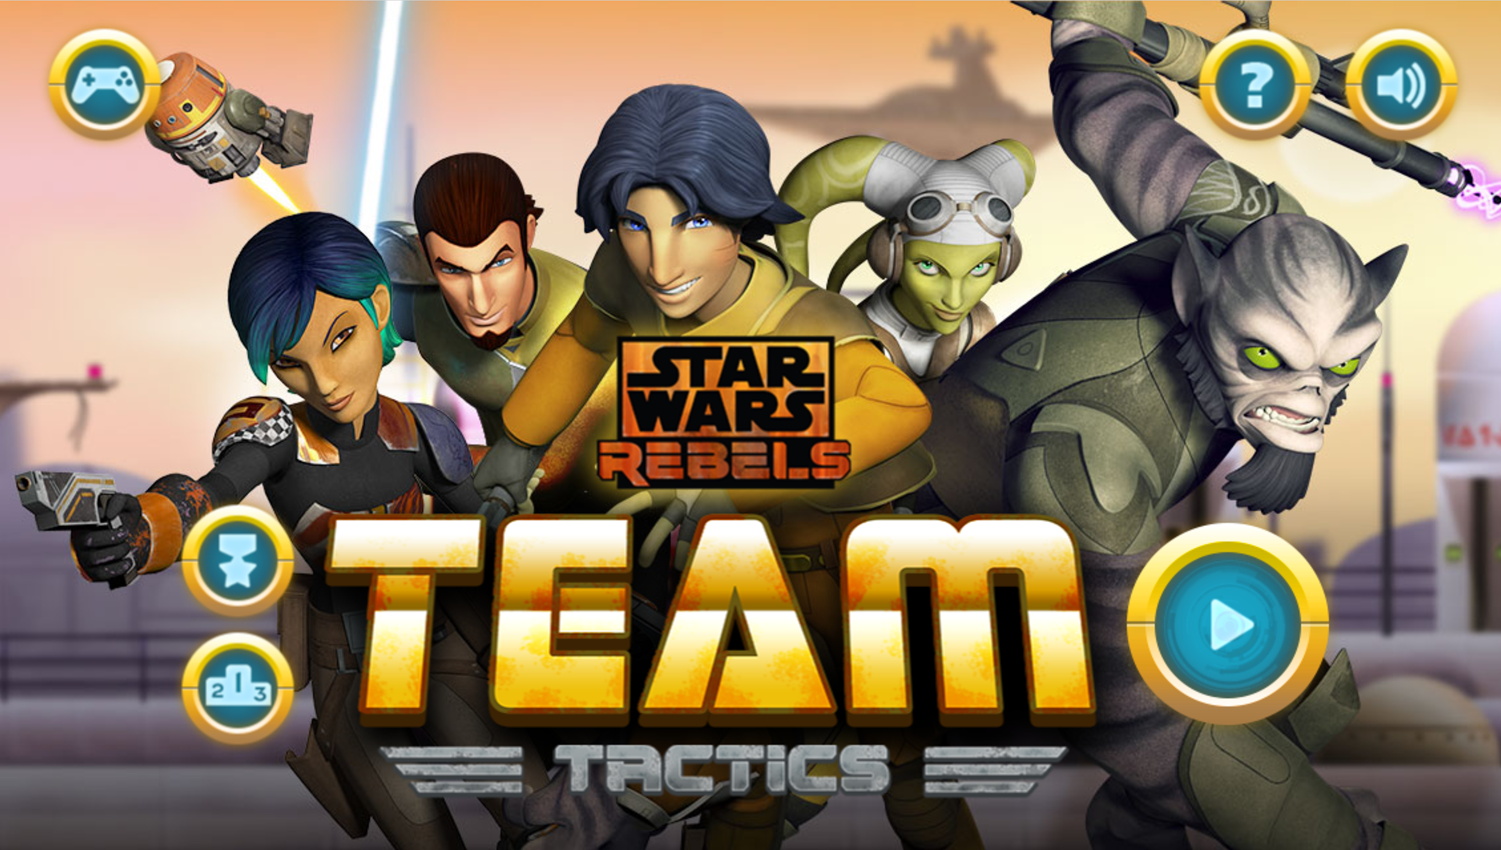 Star Wars Rebels Team Tactics Welcome Screen Screenshot.